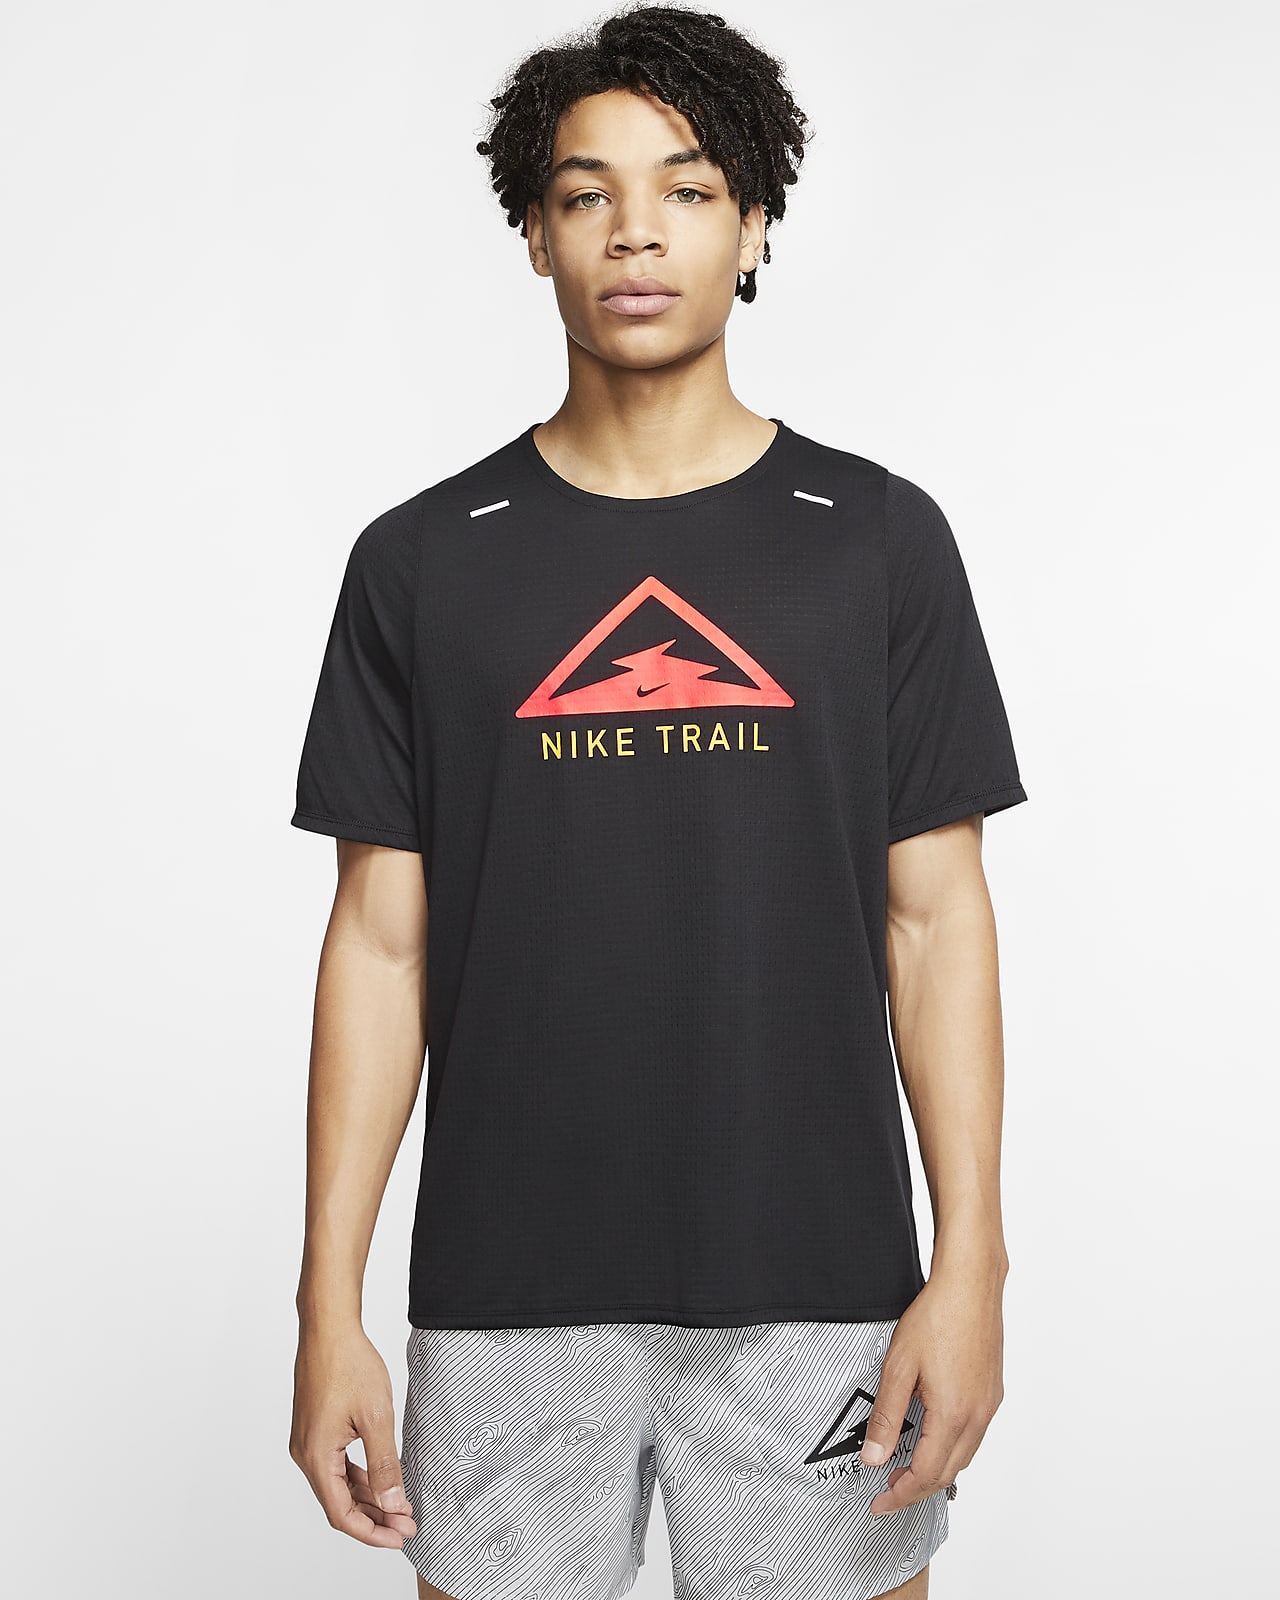 nike trail running t shirt